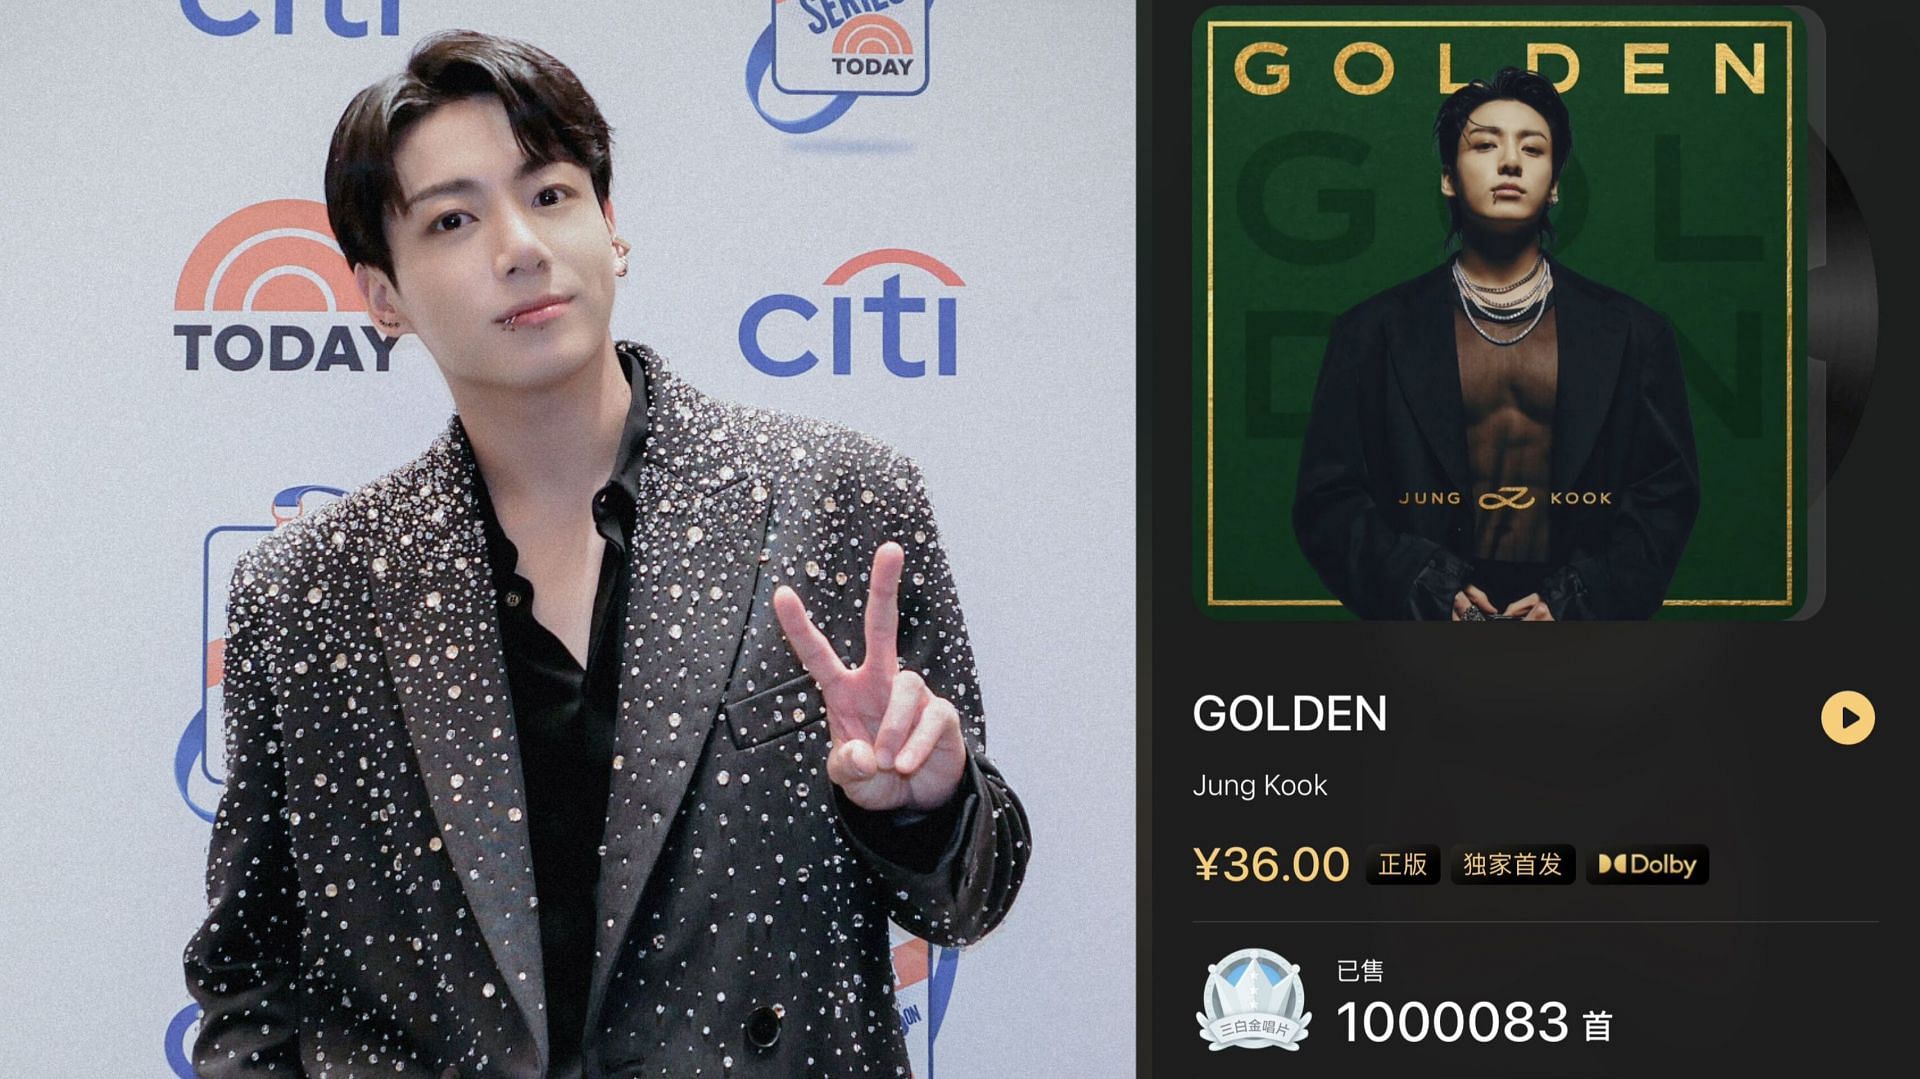 Golden (Jungkook album) - Wikipedia